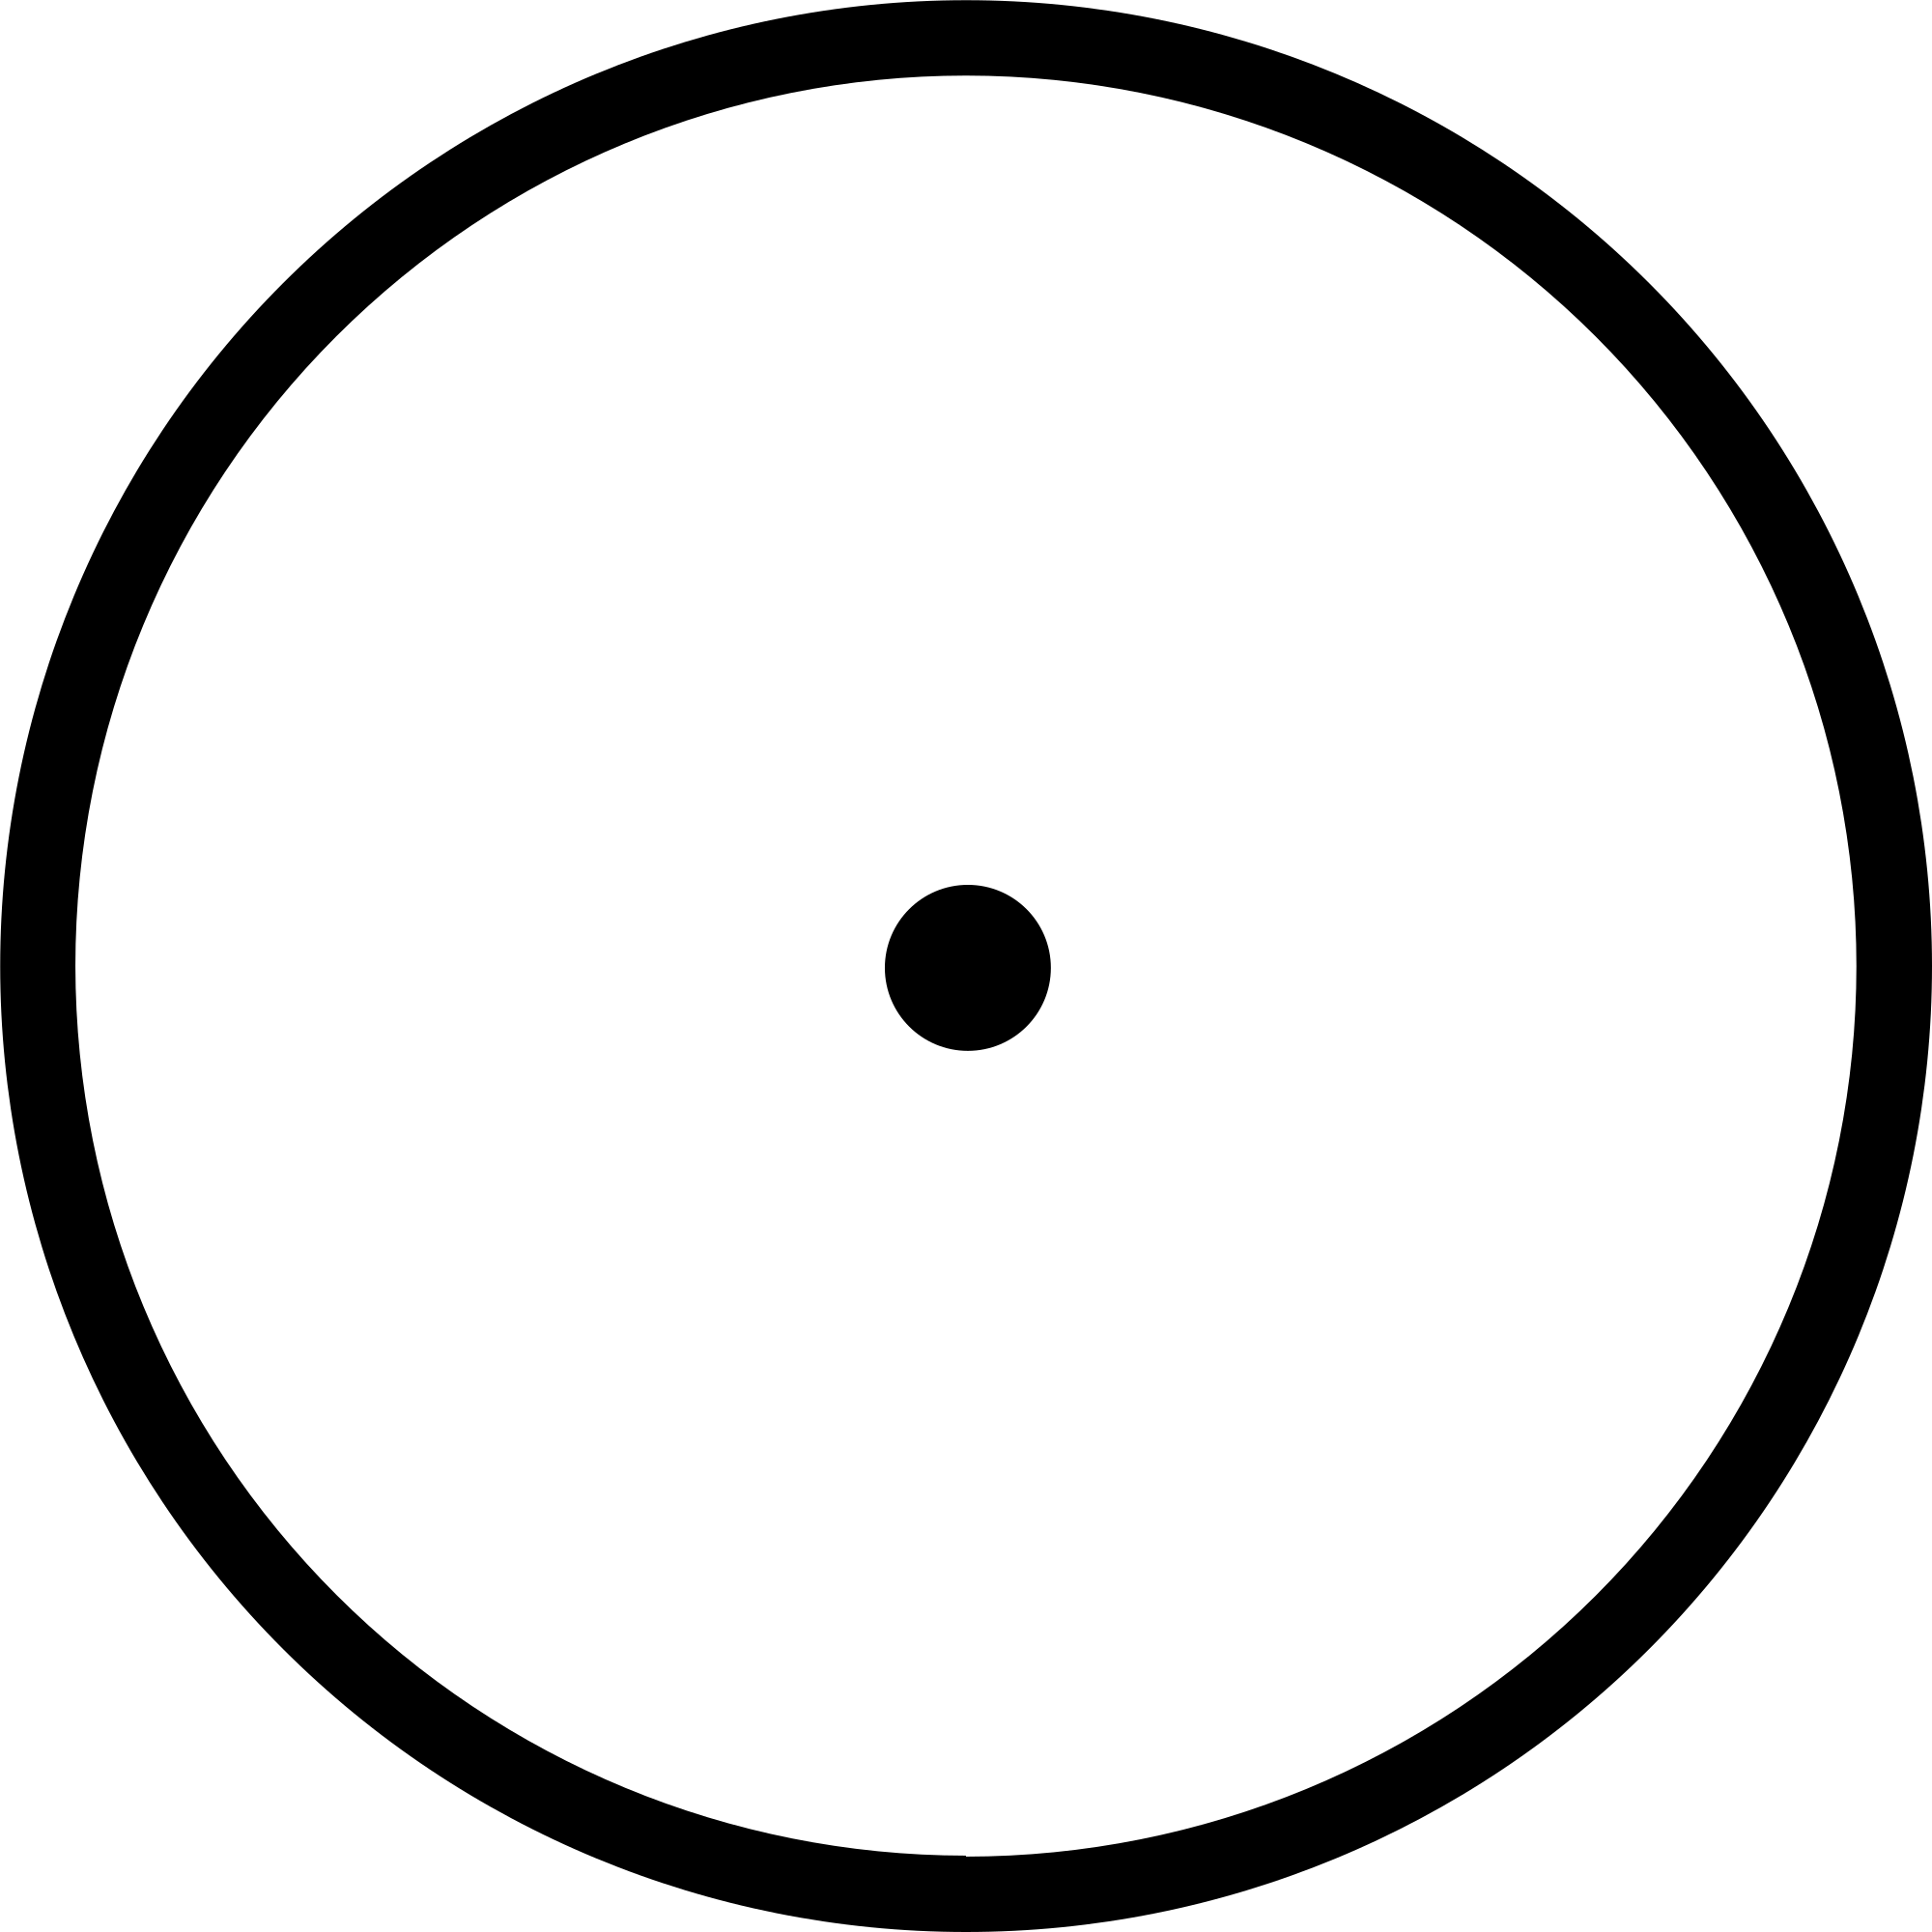 Cindicator logo in png format